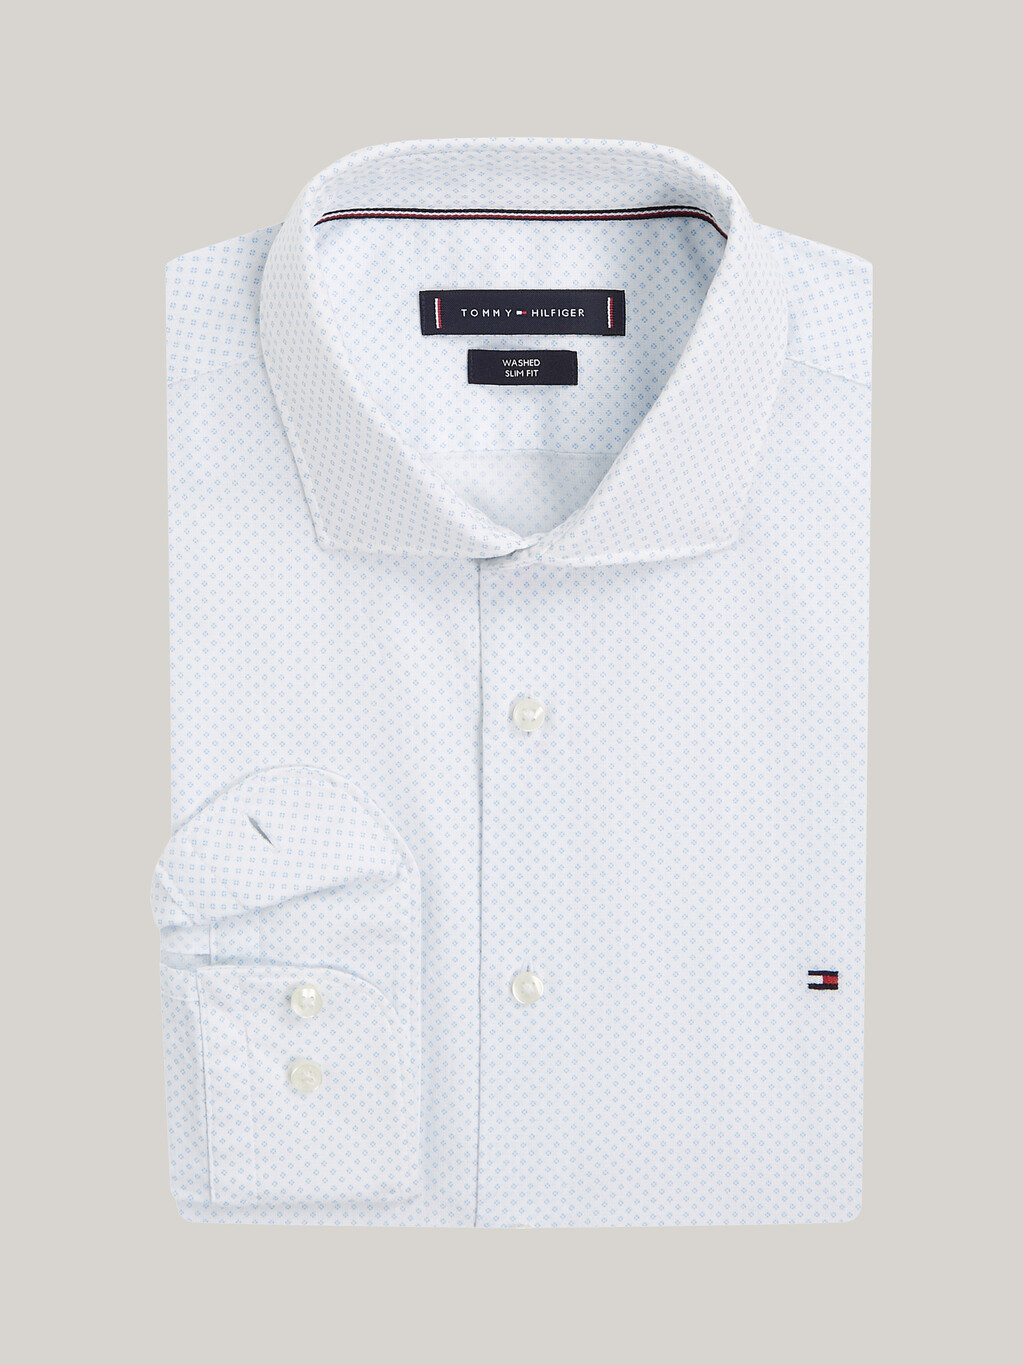 Micro Dot Print Regular Fit Shirt, White/Light Blue, hi-res